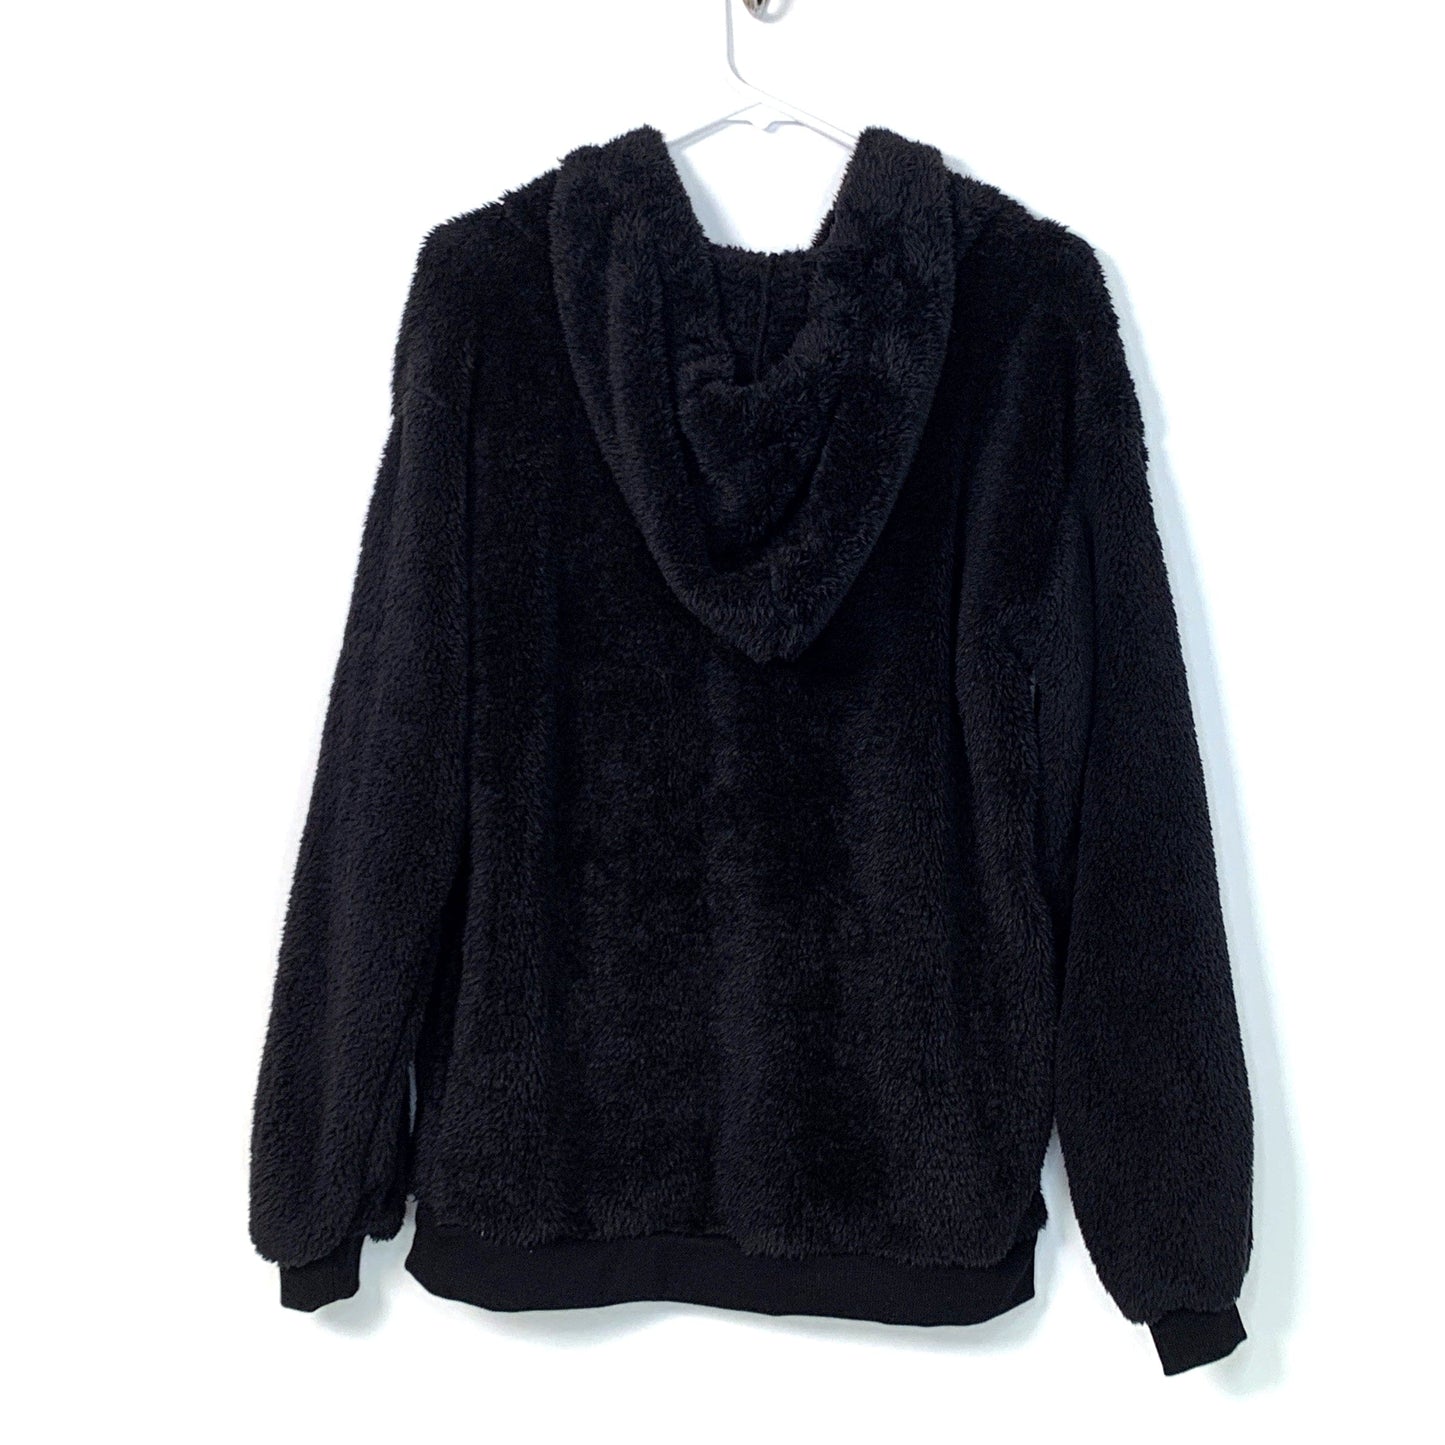 University of Wyoming Womens Size Small Black Pullover Hoodie Sweatshirt 1/4 Zip